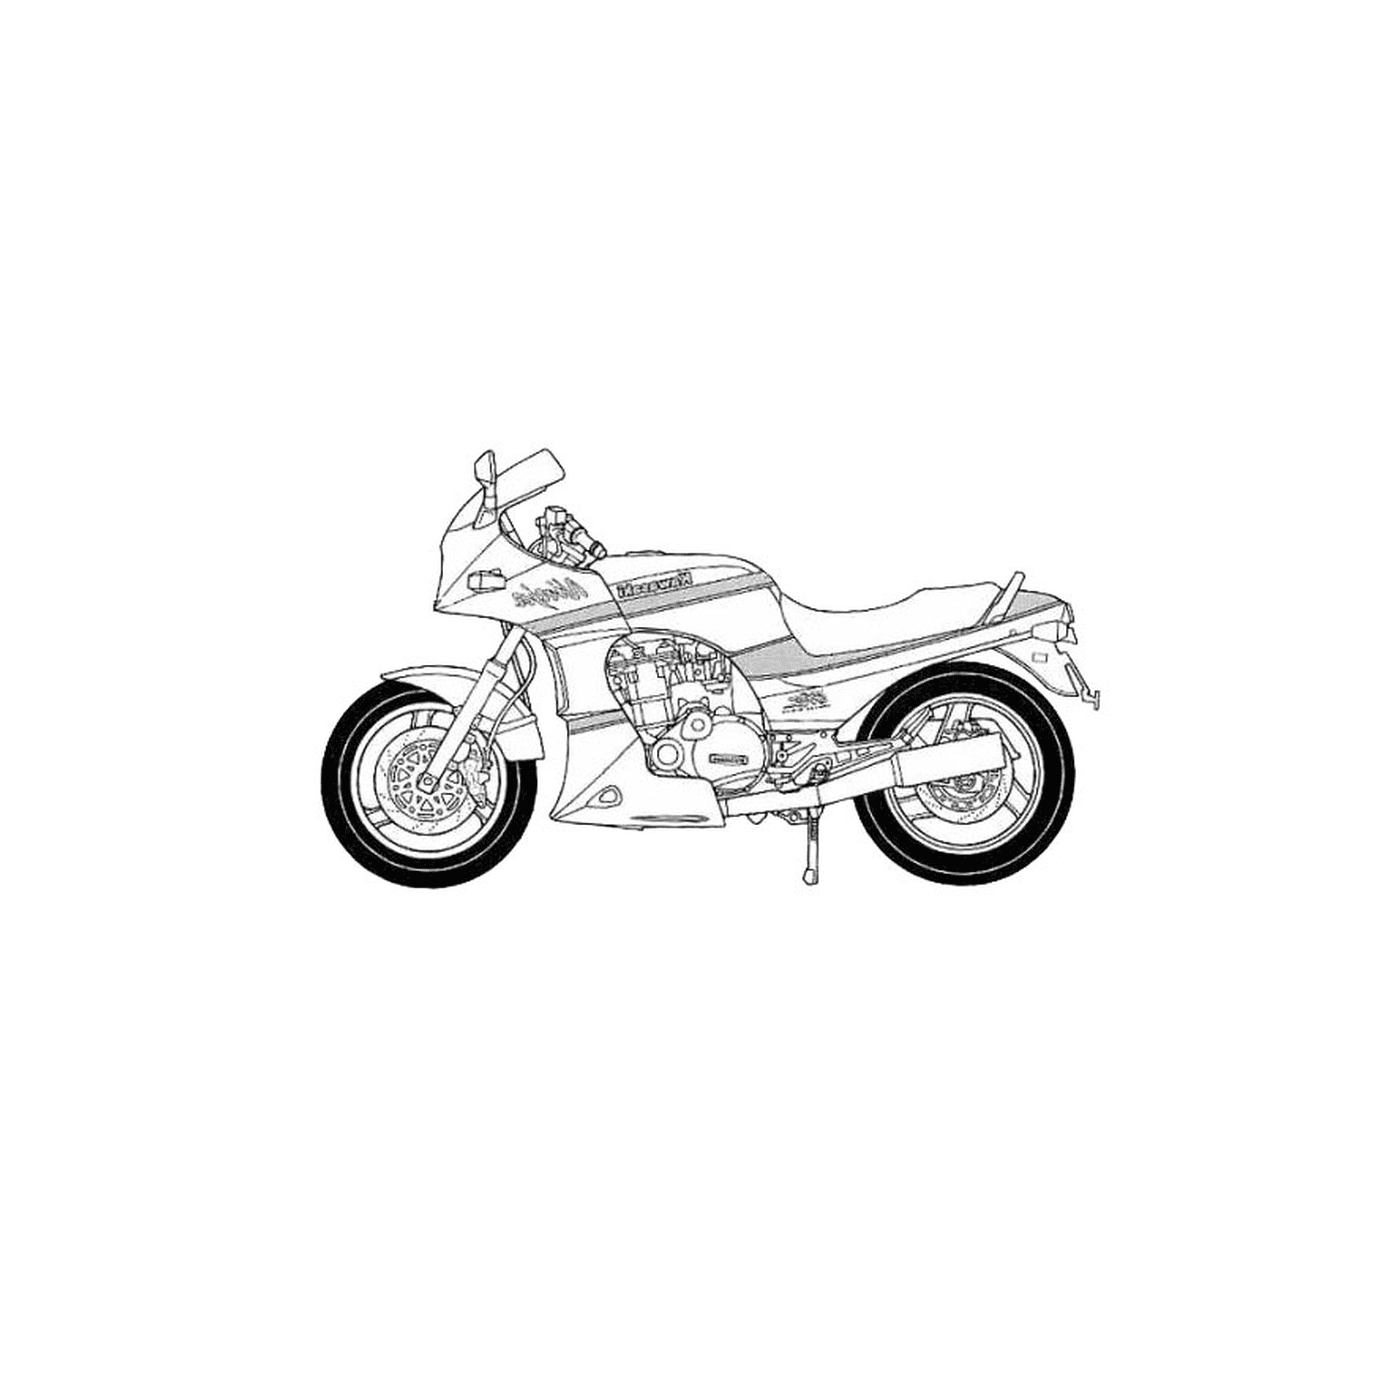   moto kawasaki sur fond blanc 